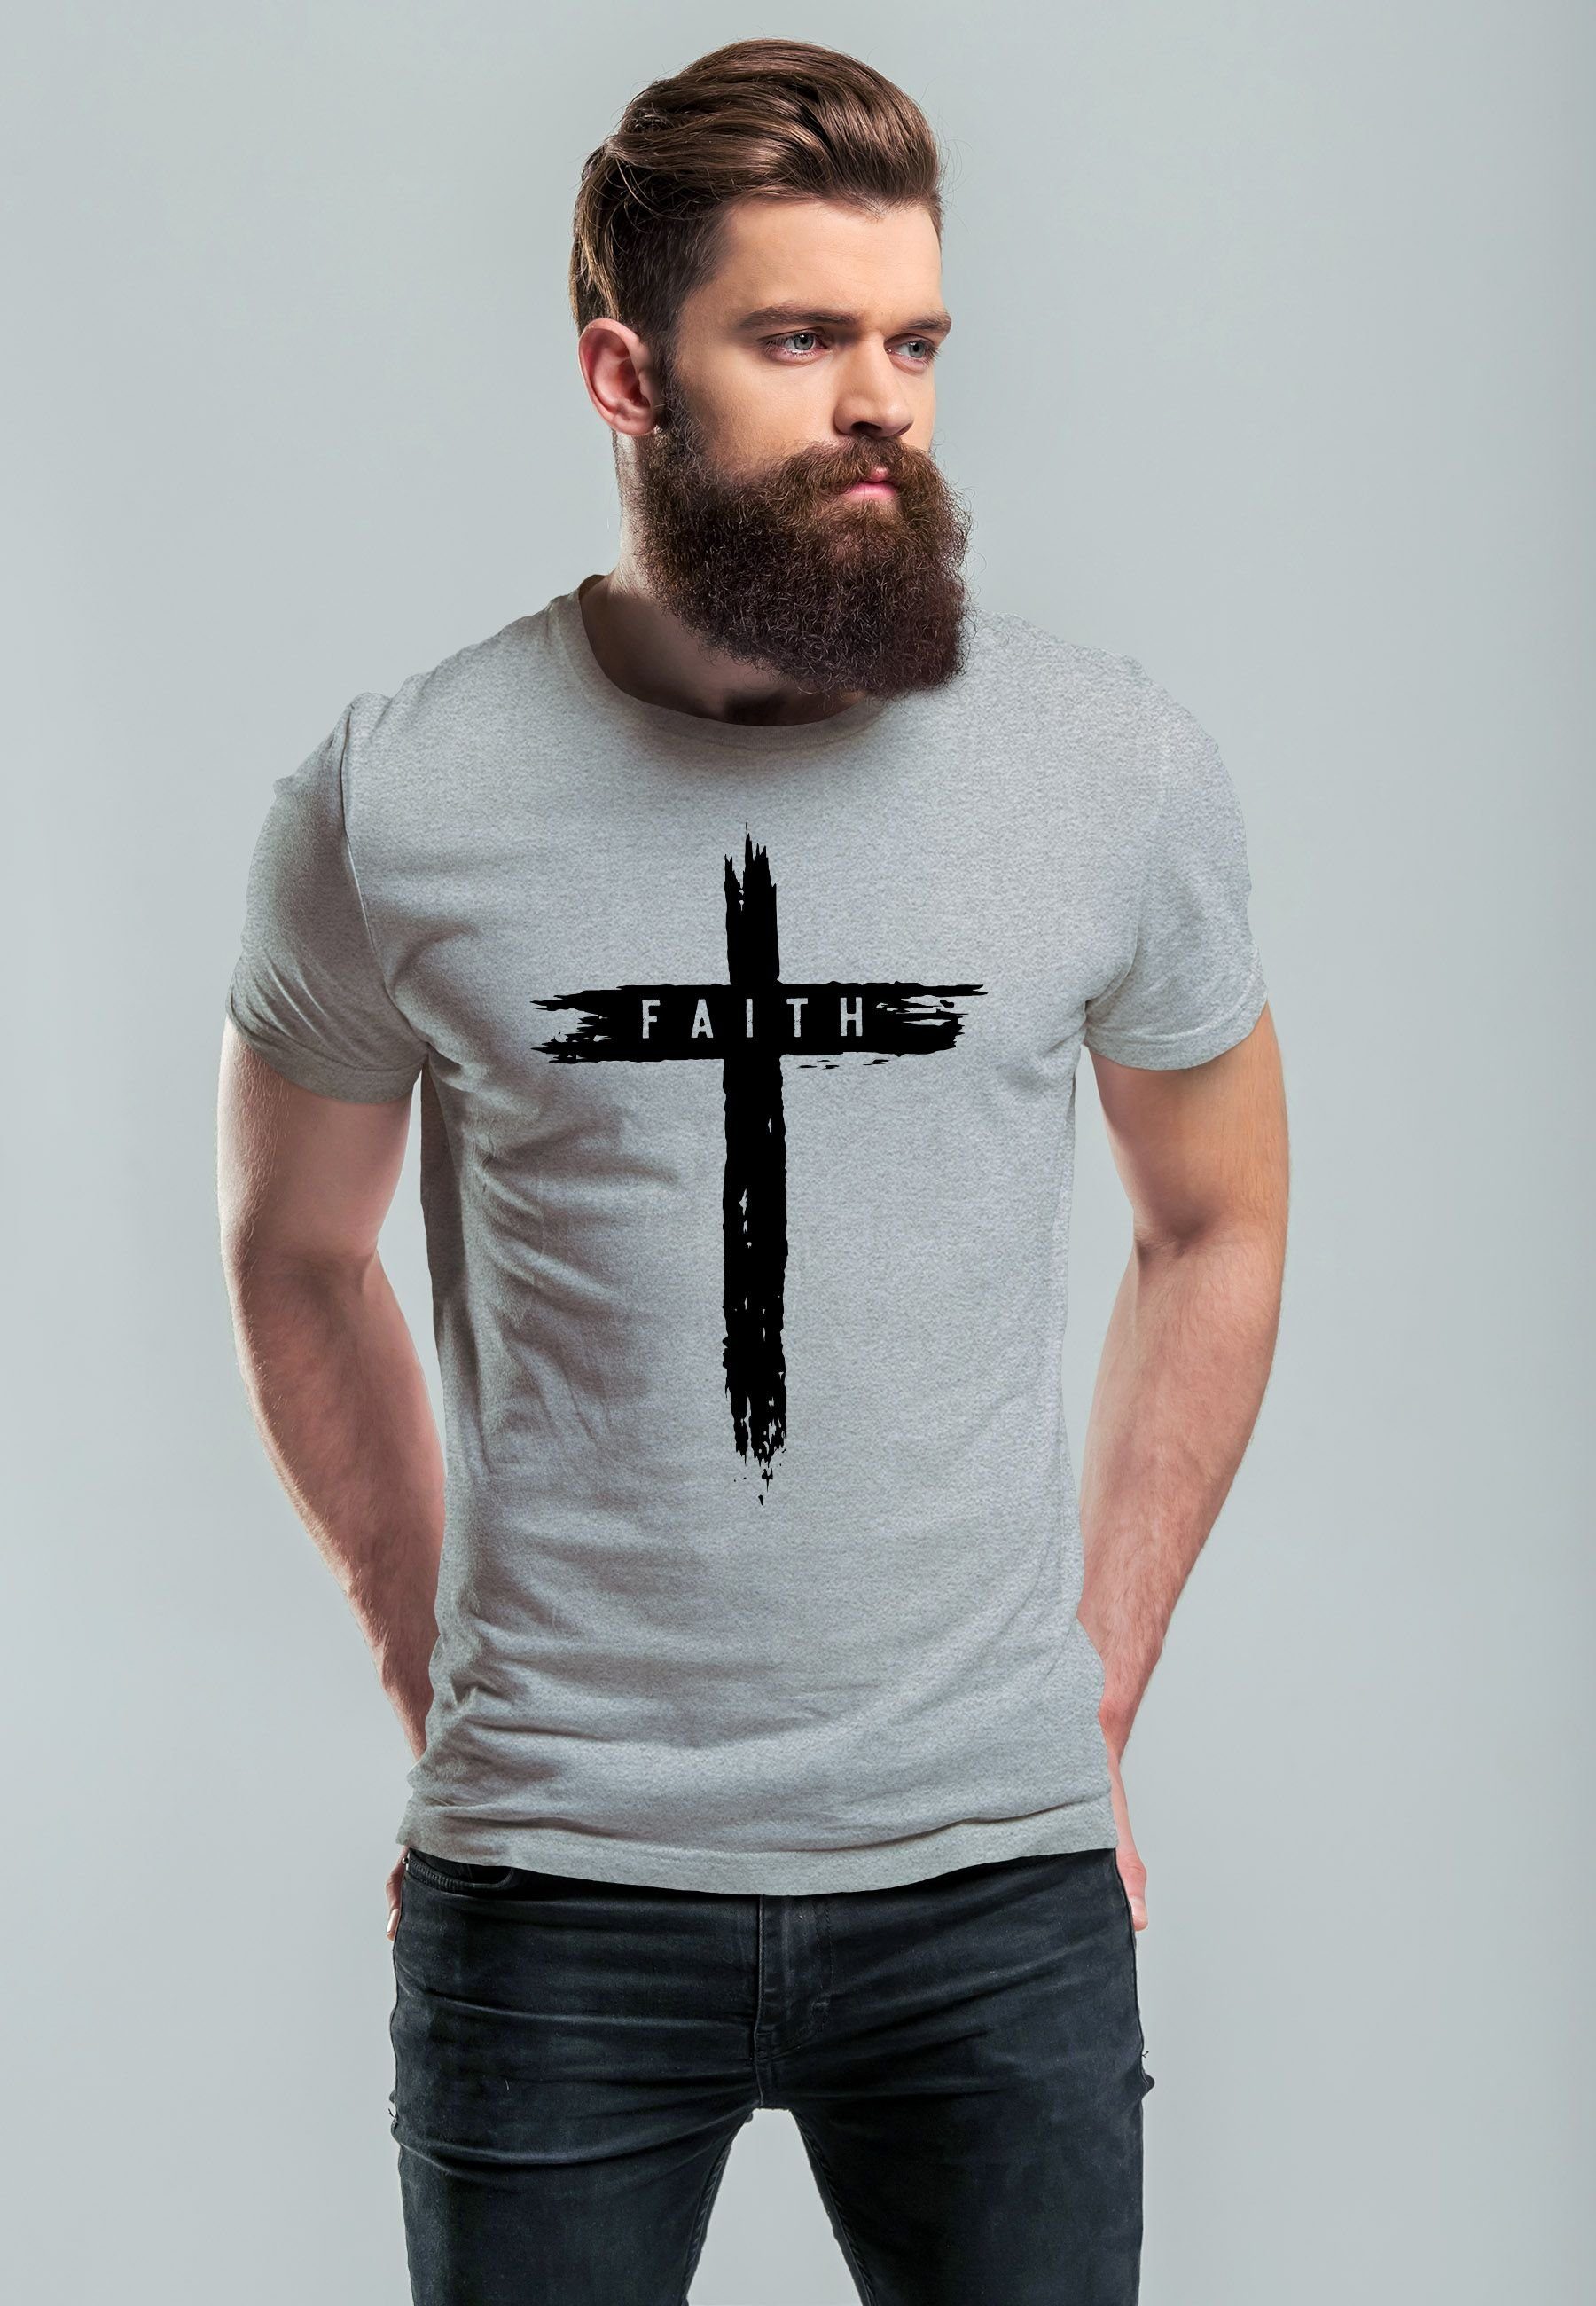 Neverless Print-Shirt Herren T-Shirt Printshirt grau Aufdruck Cross Trend-Moti Print Glaube mit Faith Kreuz